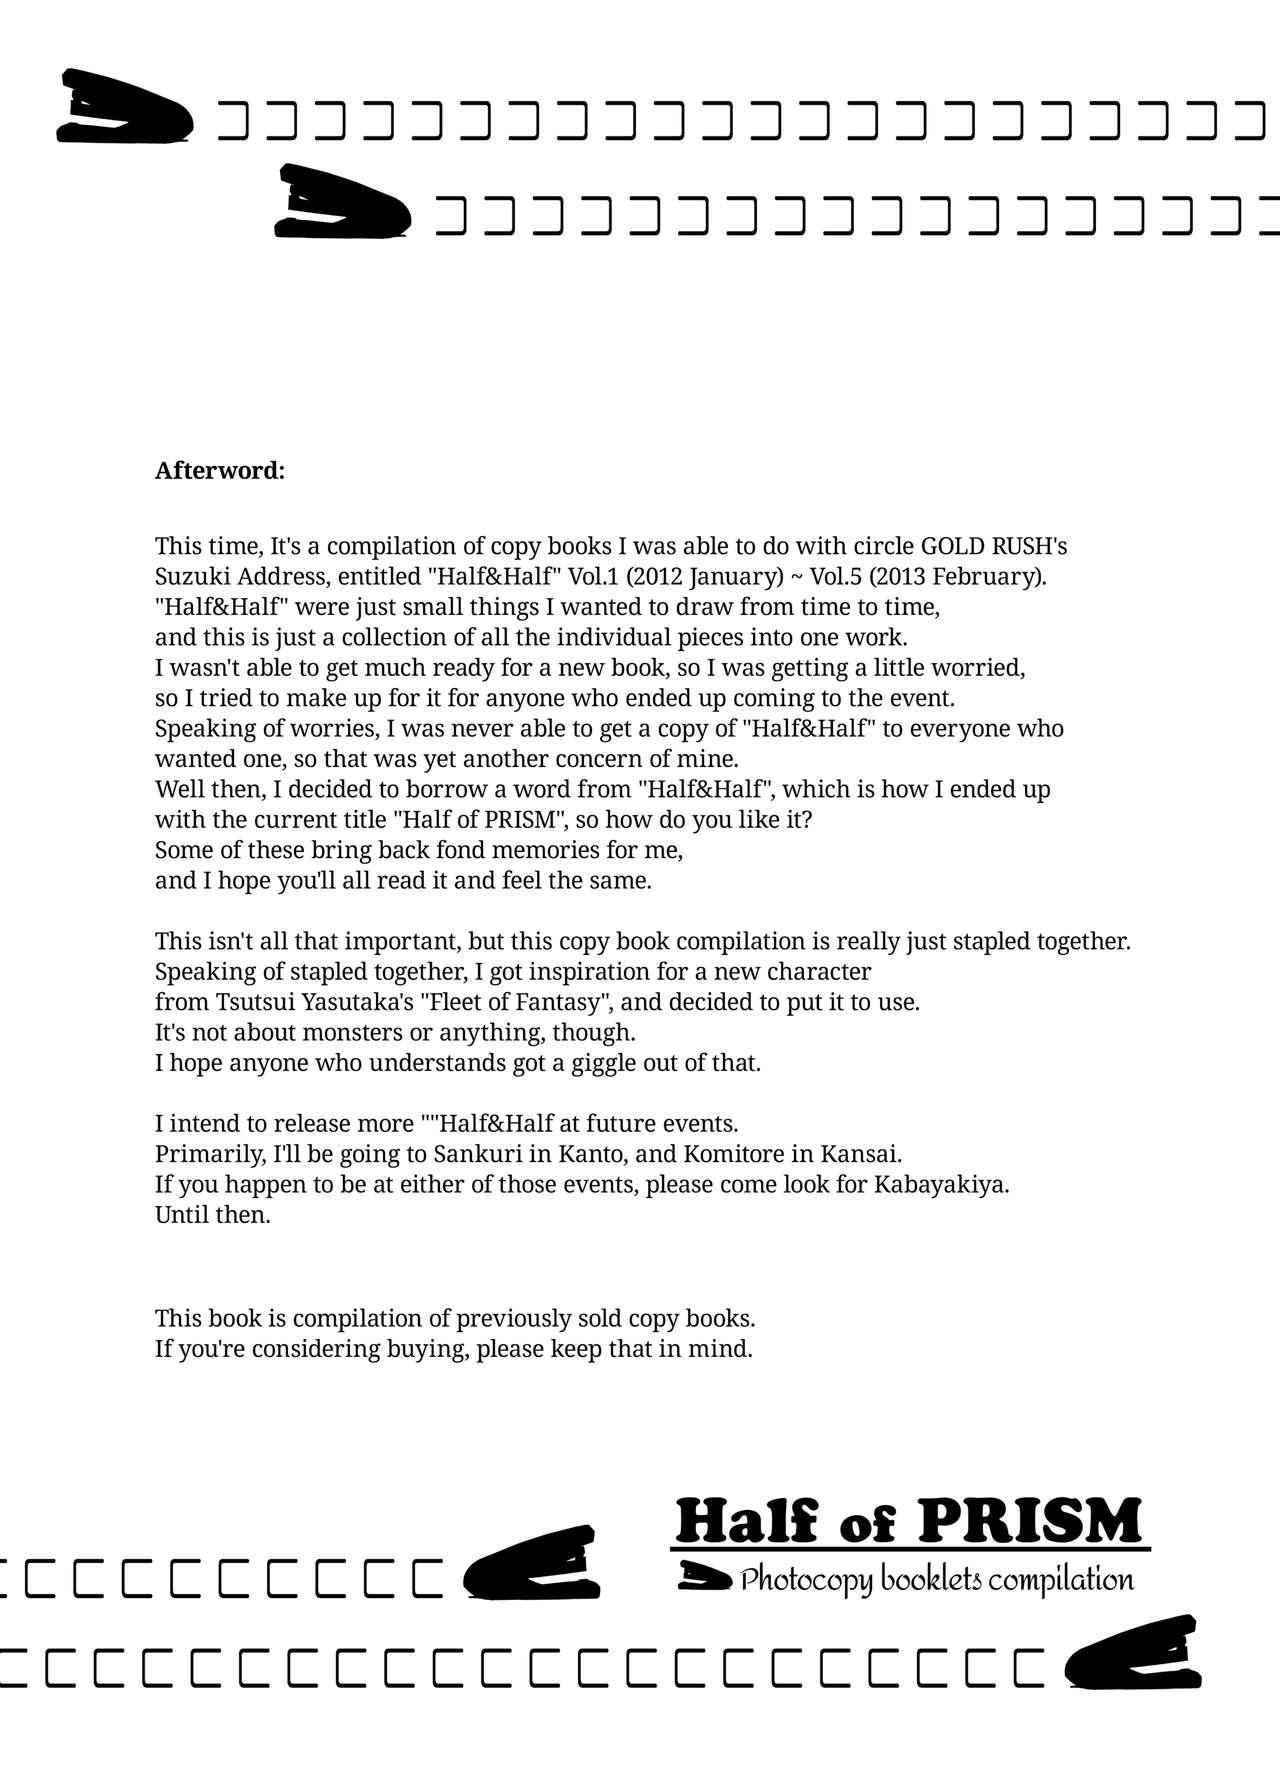 Half of PRISM 23